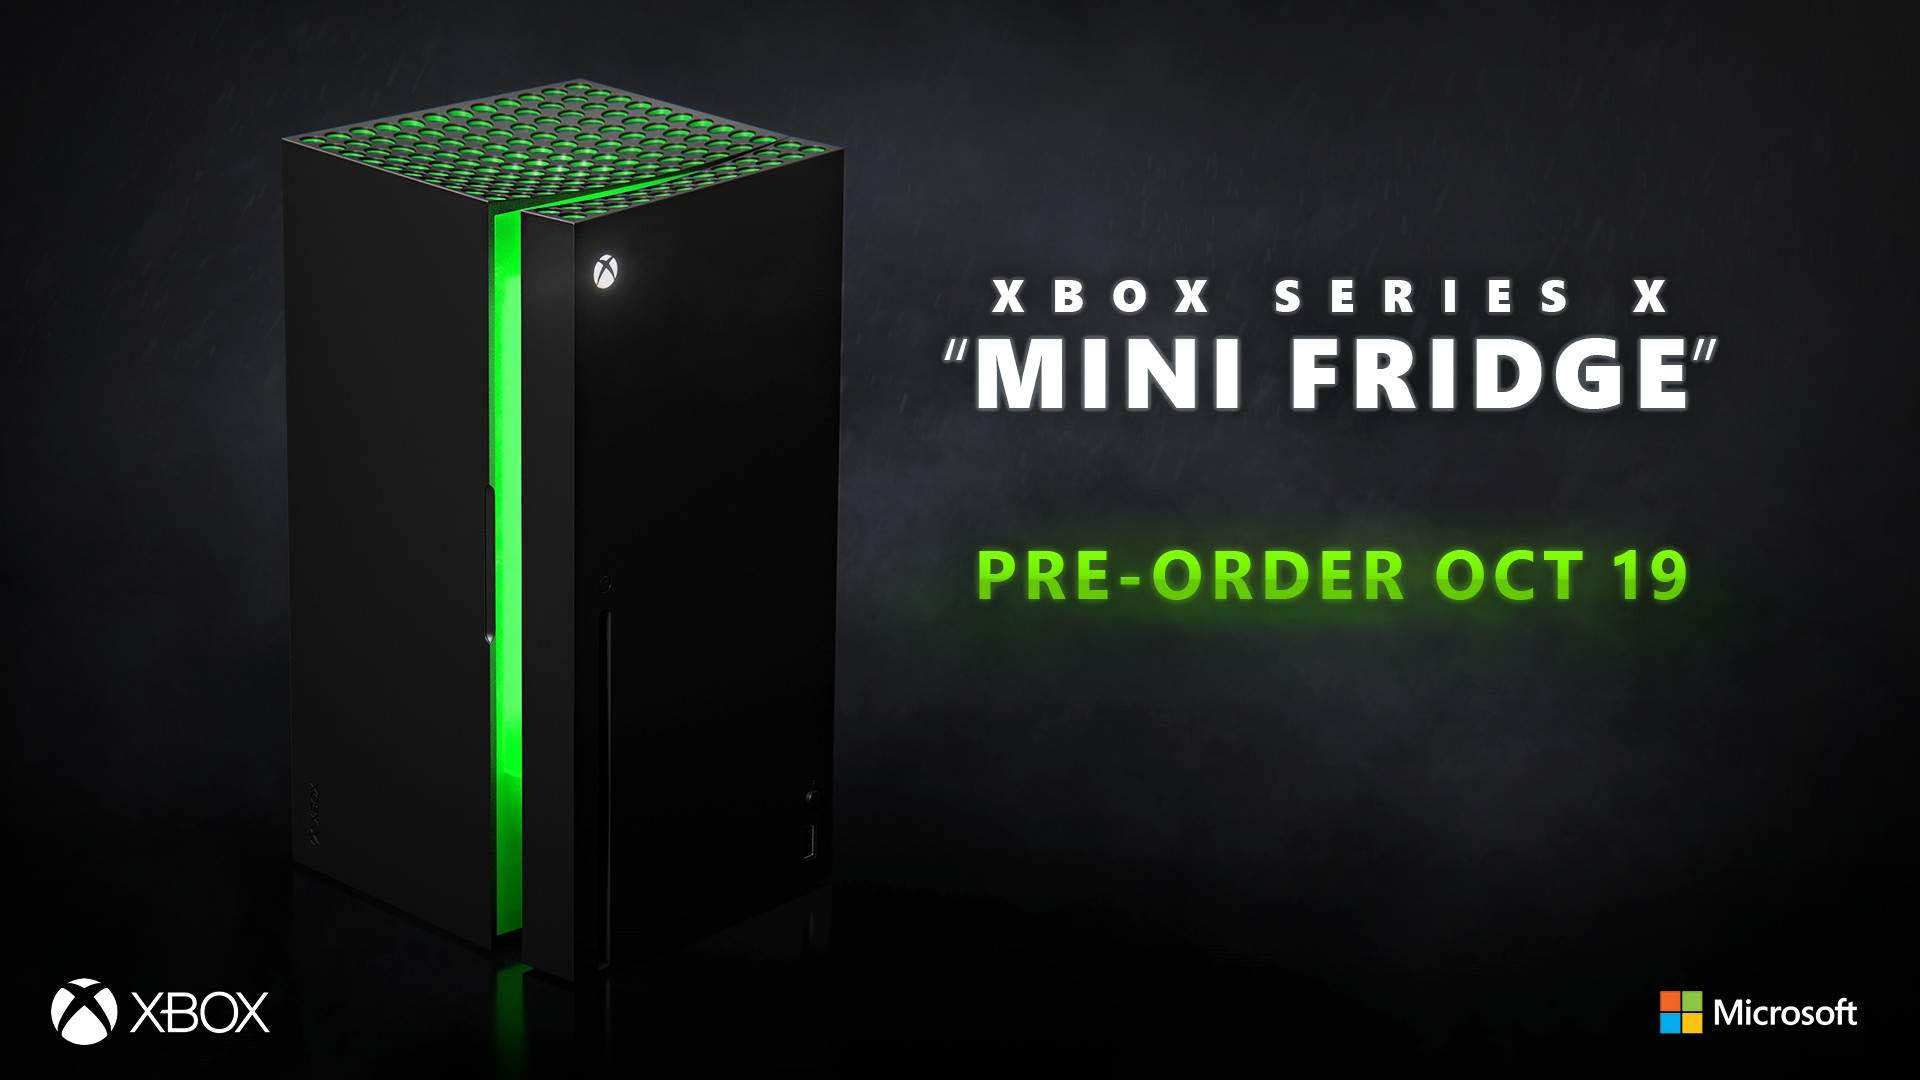 Xbox Series X型の小型冷蔵庫「Xbox Mini Fridge」の予約受付が10月19日にスタート。日本での販売については未発表